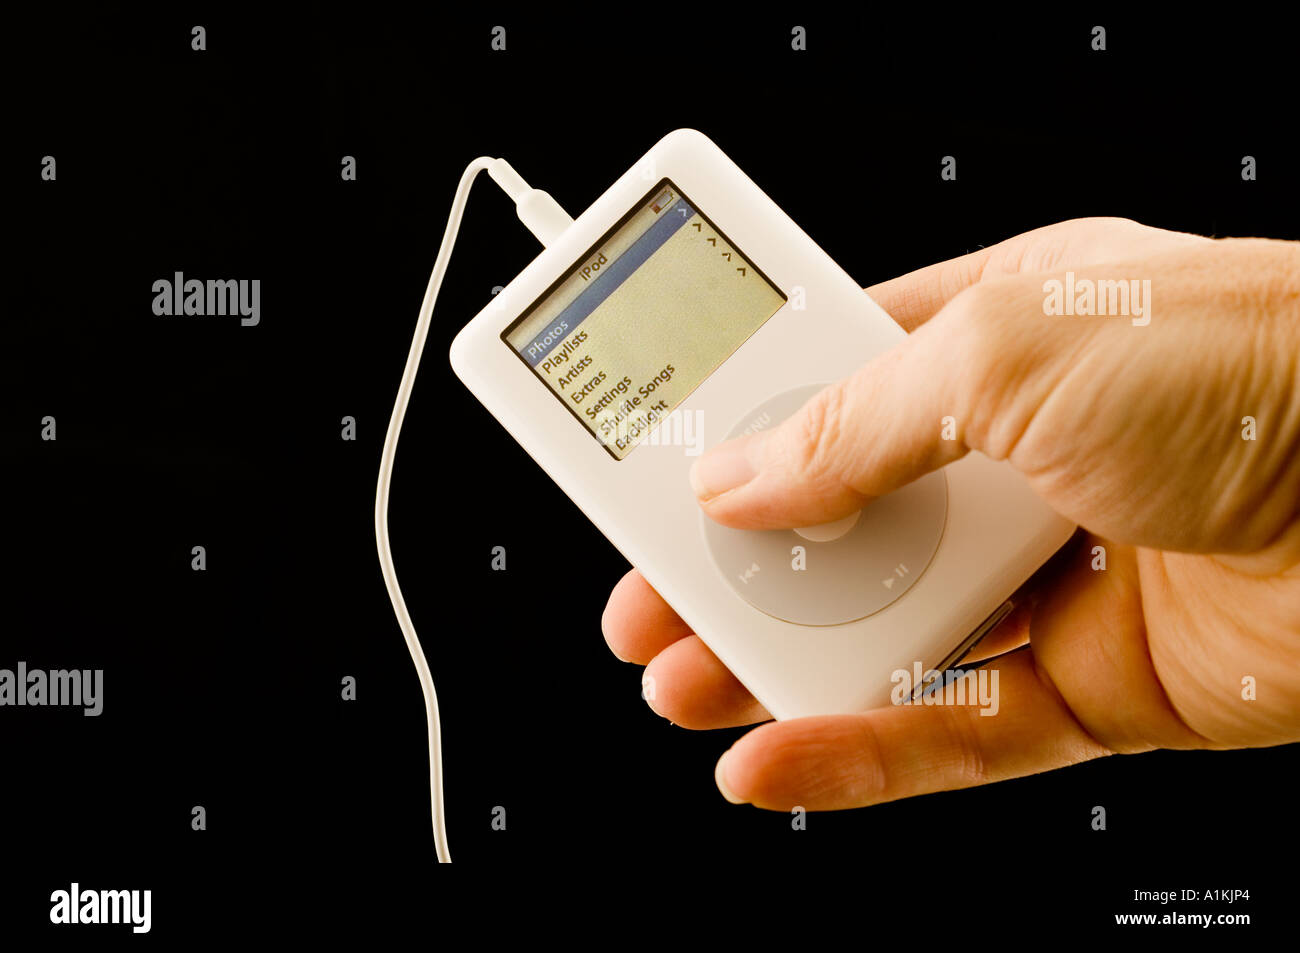 hand with ipod apple macintosh MP3 player Stock Photo